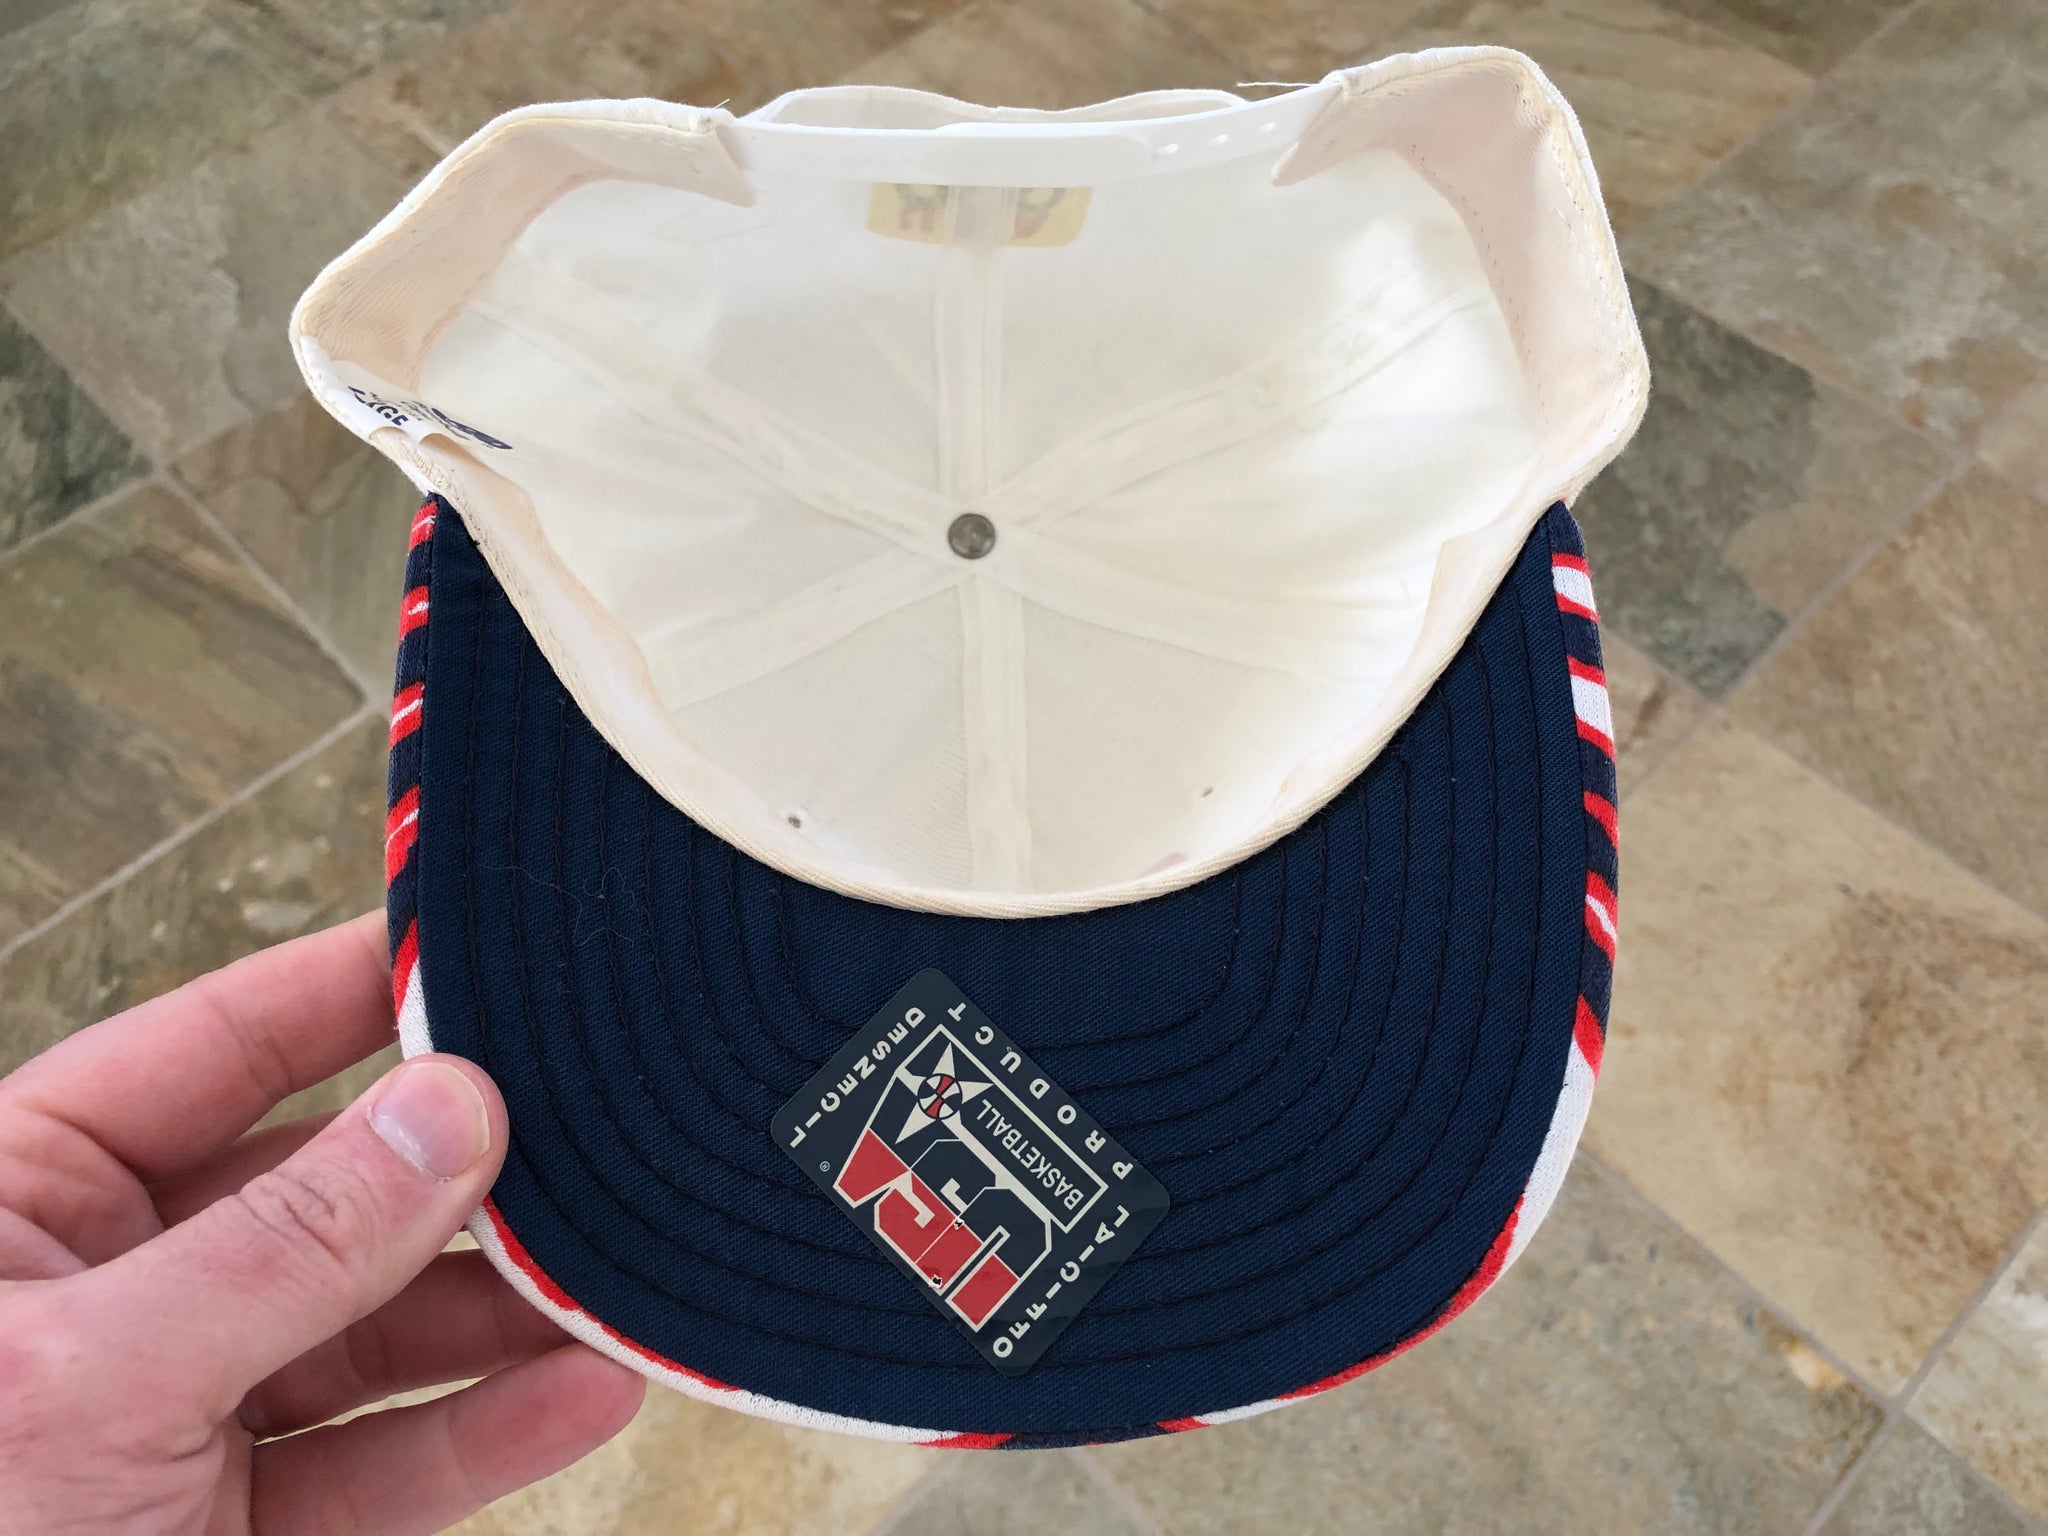 Vintage 90's Michael Jordan Chicago Bulls Zubaz Snapback Hat